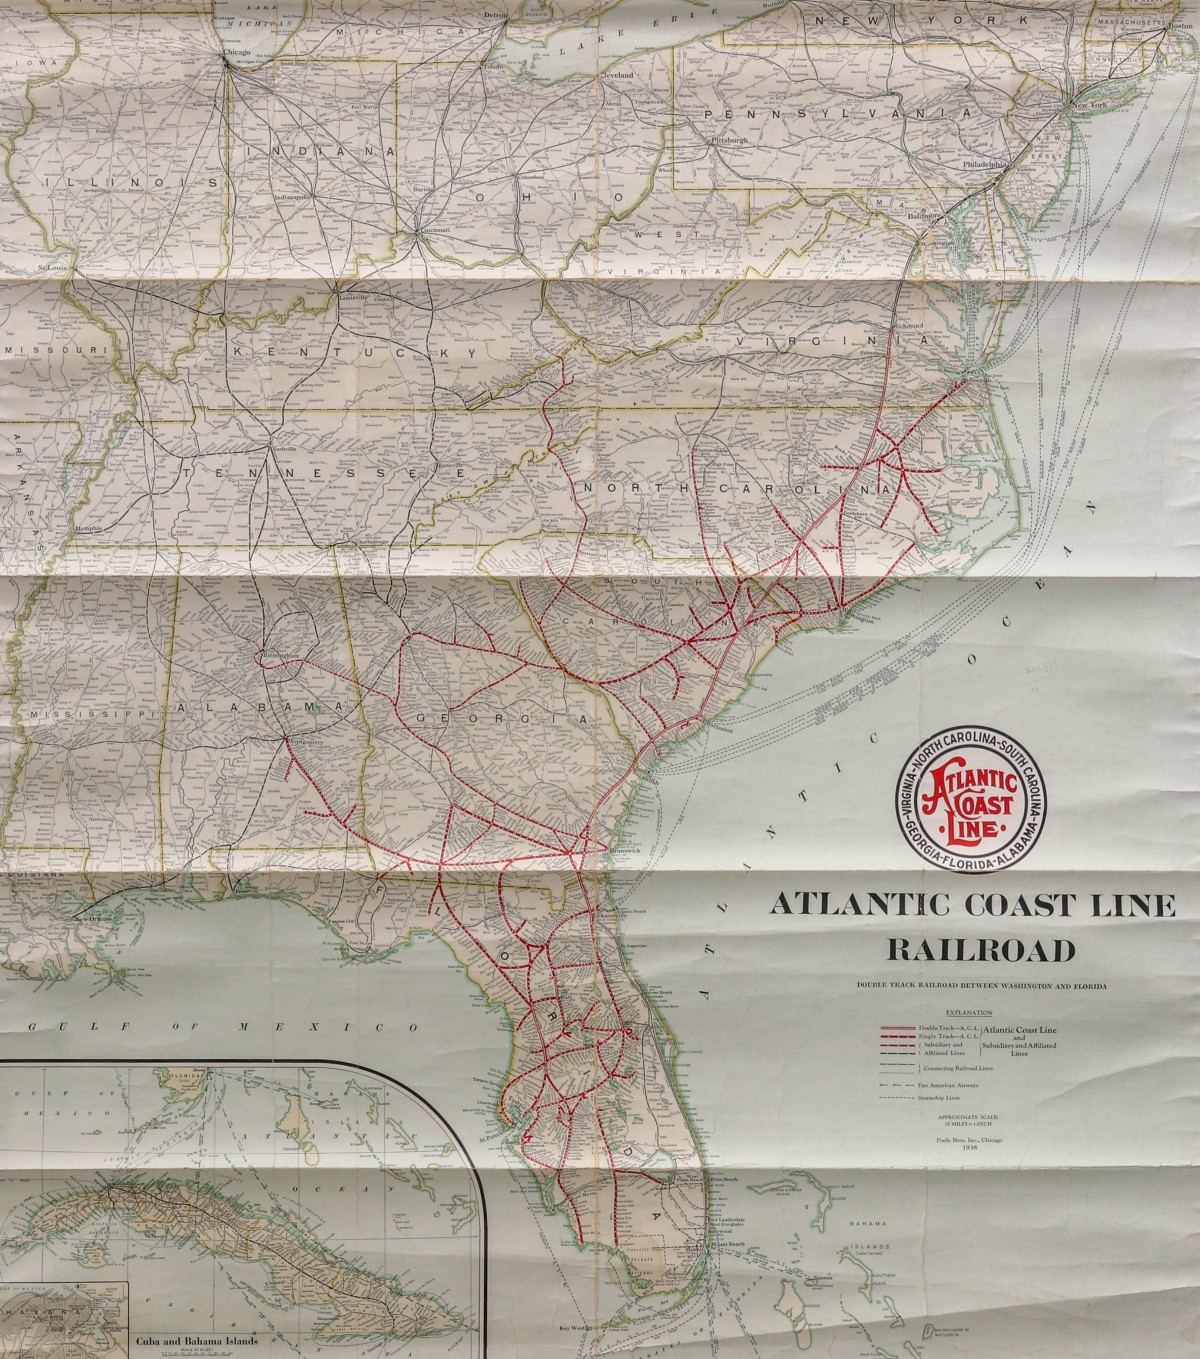 AN ATLANTIC COAST LINE RAILROAD MAP DATED 1938